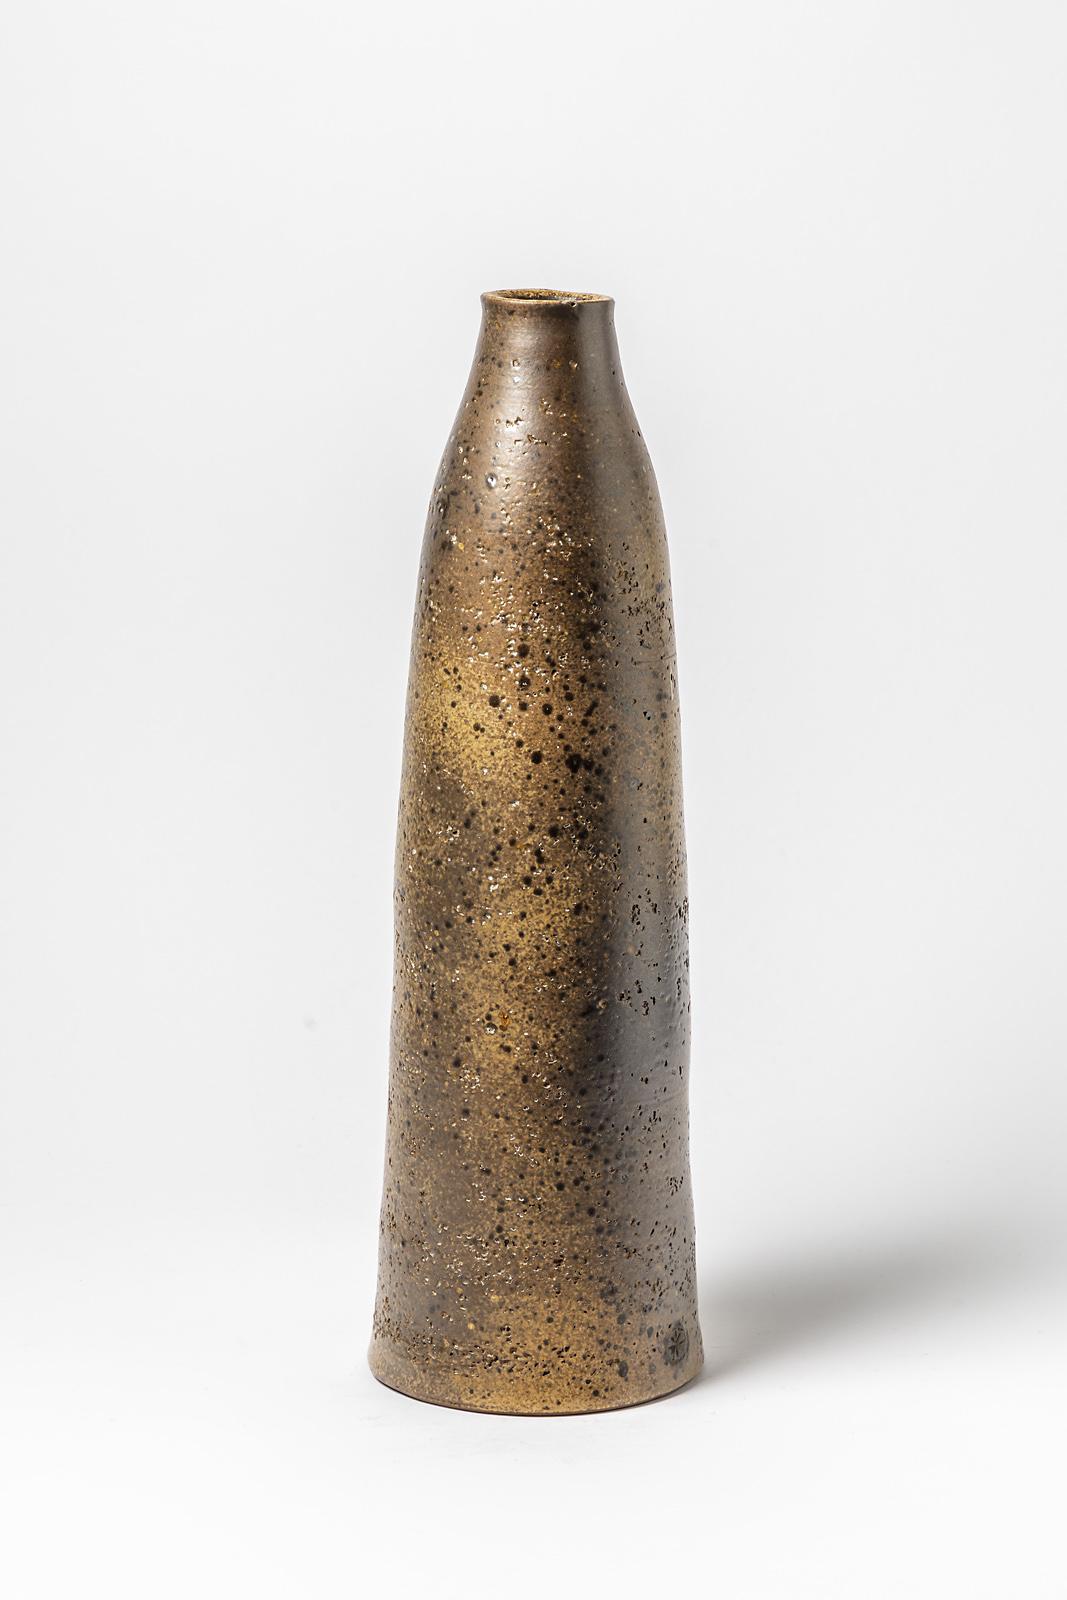 Mid-Century Modern Mid-20th Century Large Stoneware Ceramic Bottle or Vase Signed  For Sale